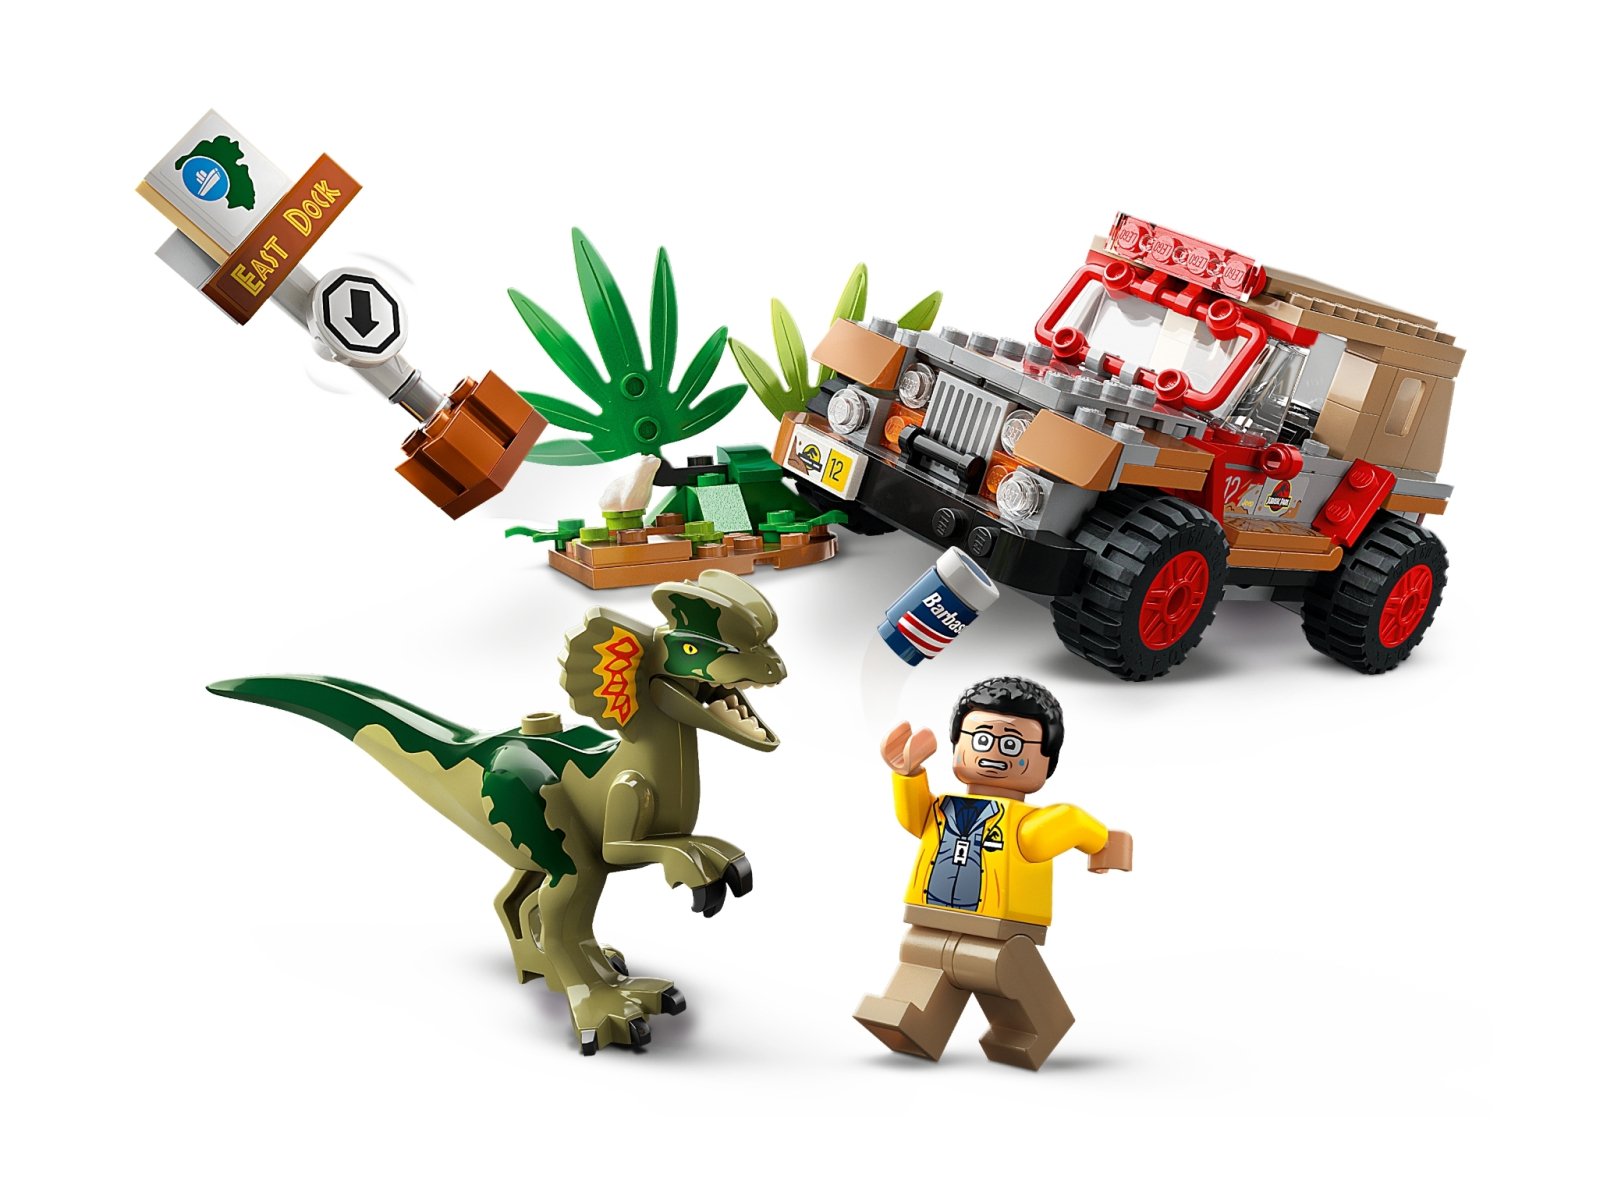 LEGO 76958 Zasadzka na dilofozaura